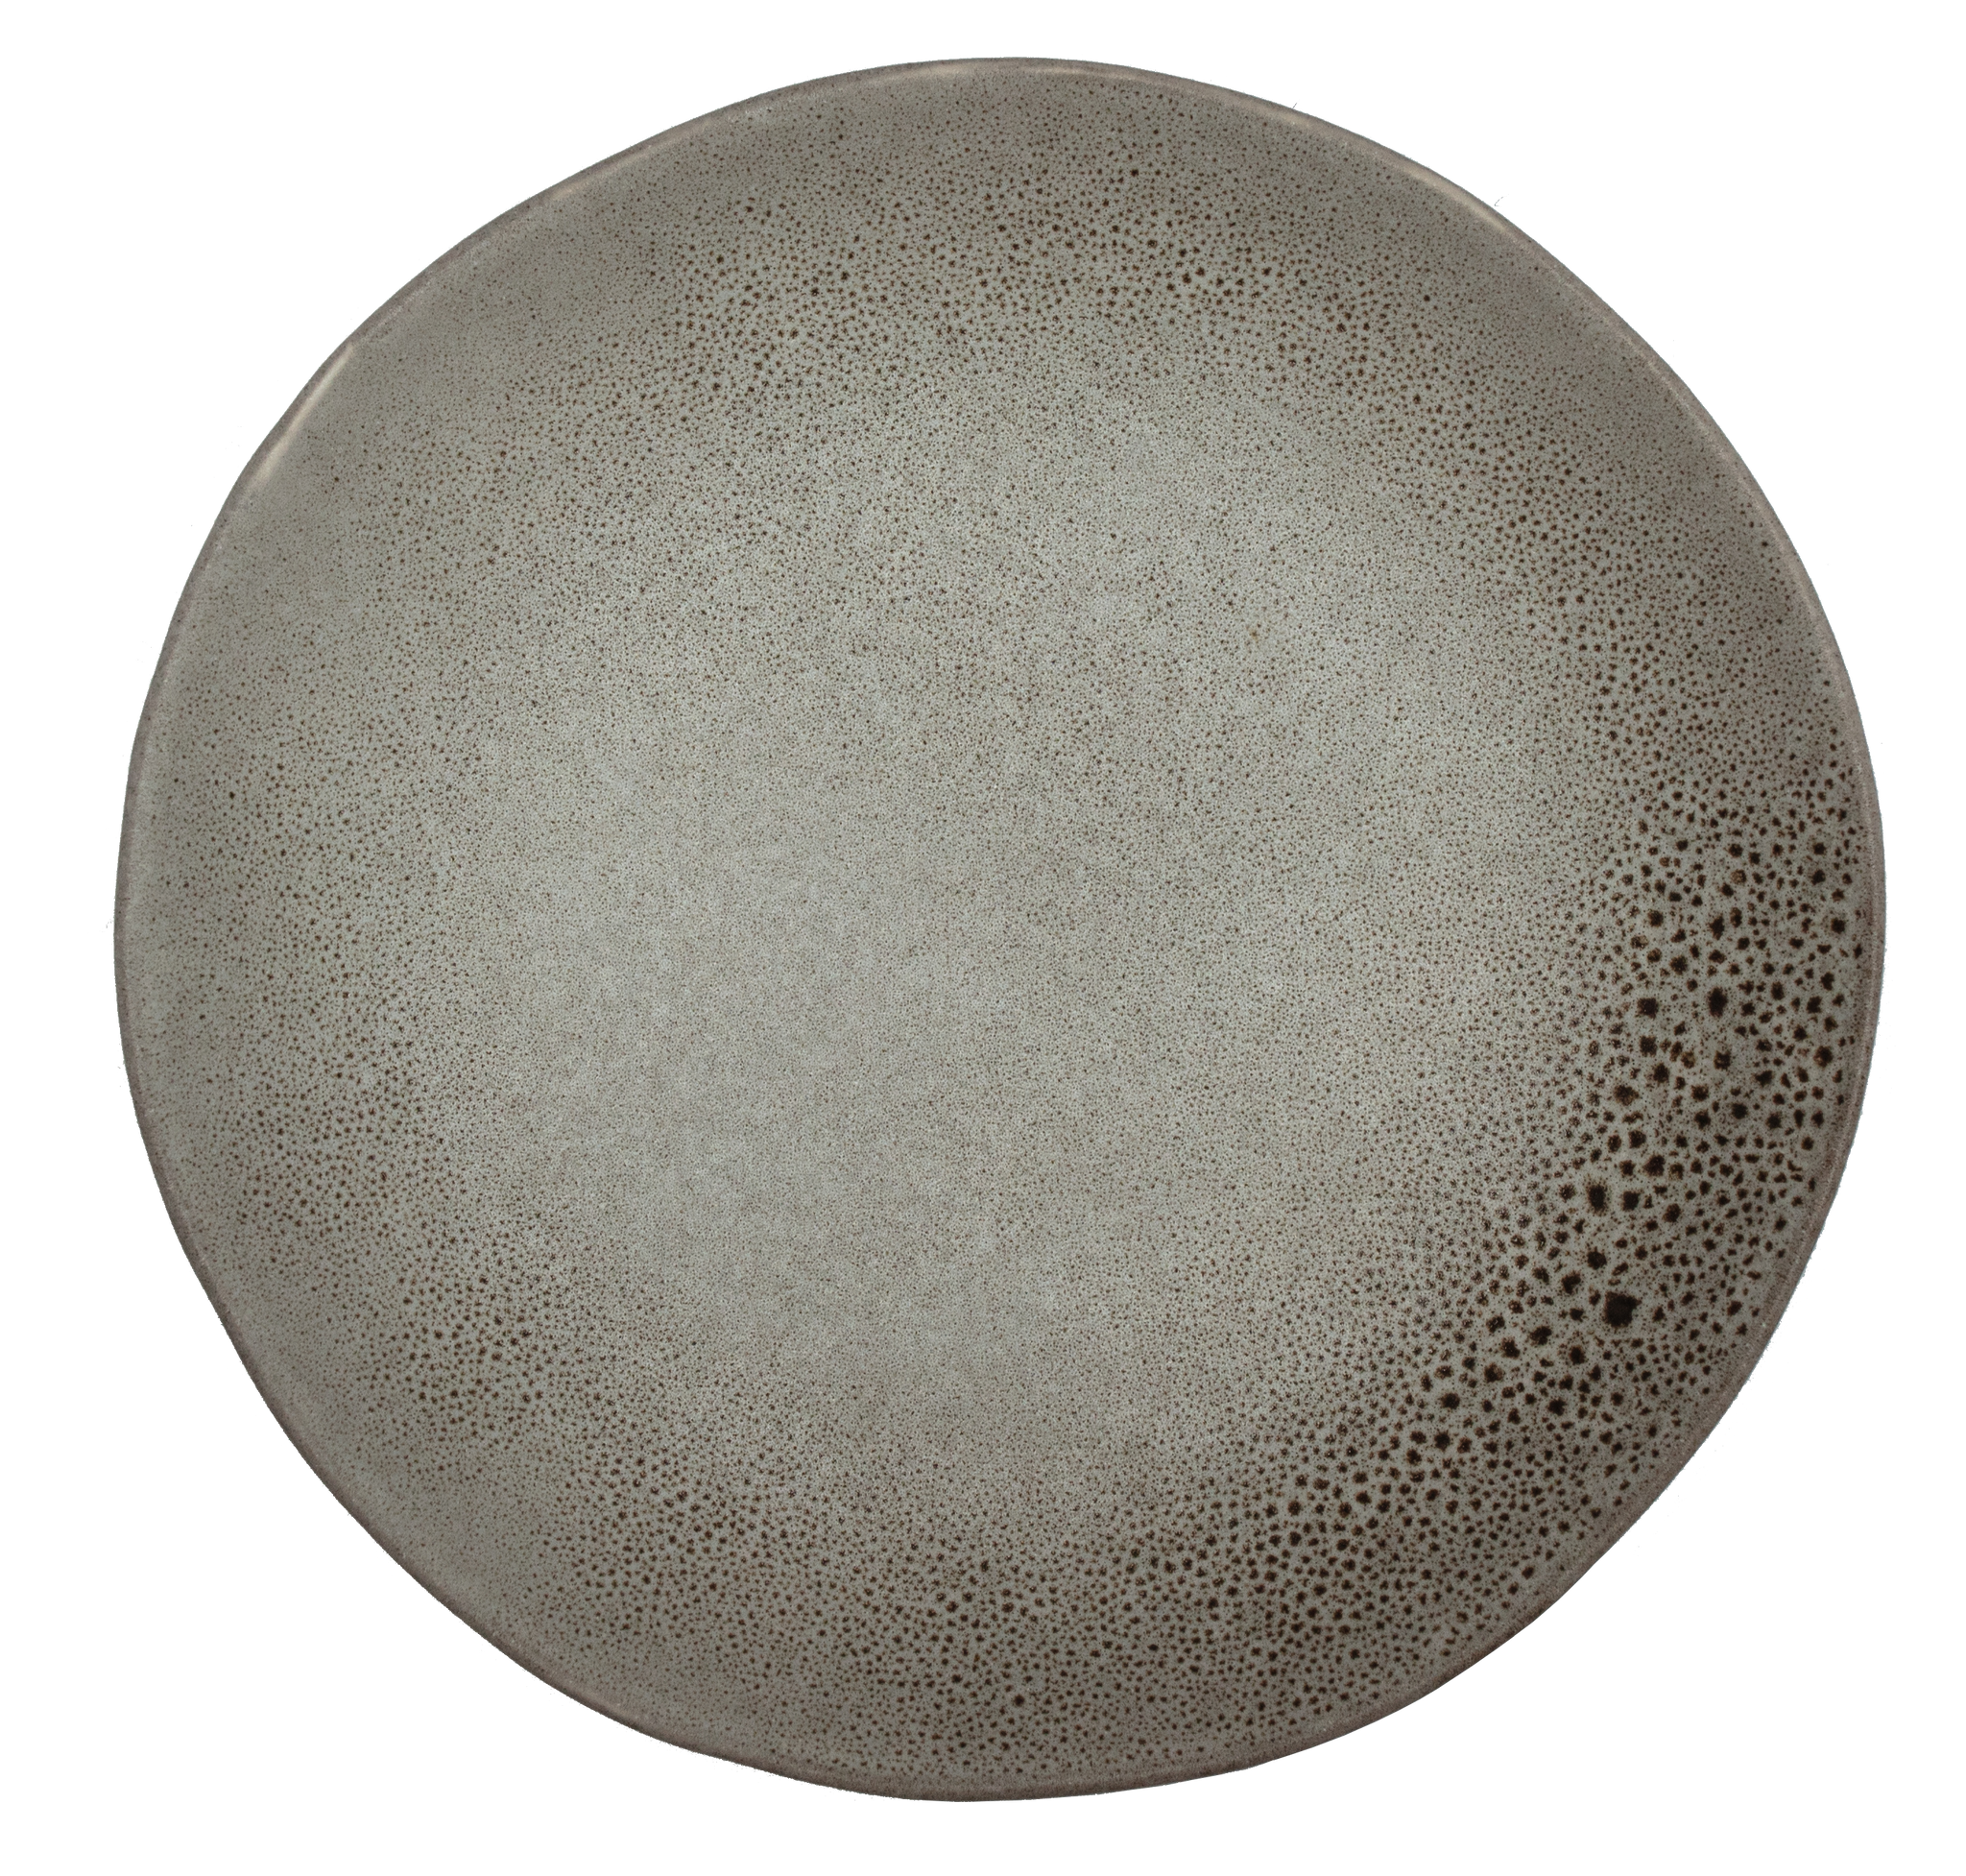 Moonlight Grey Coupe Plate Ø29cm